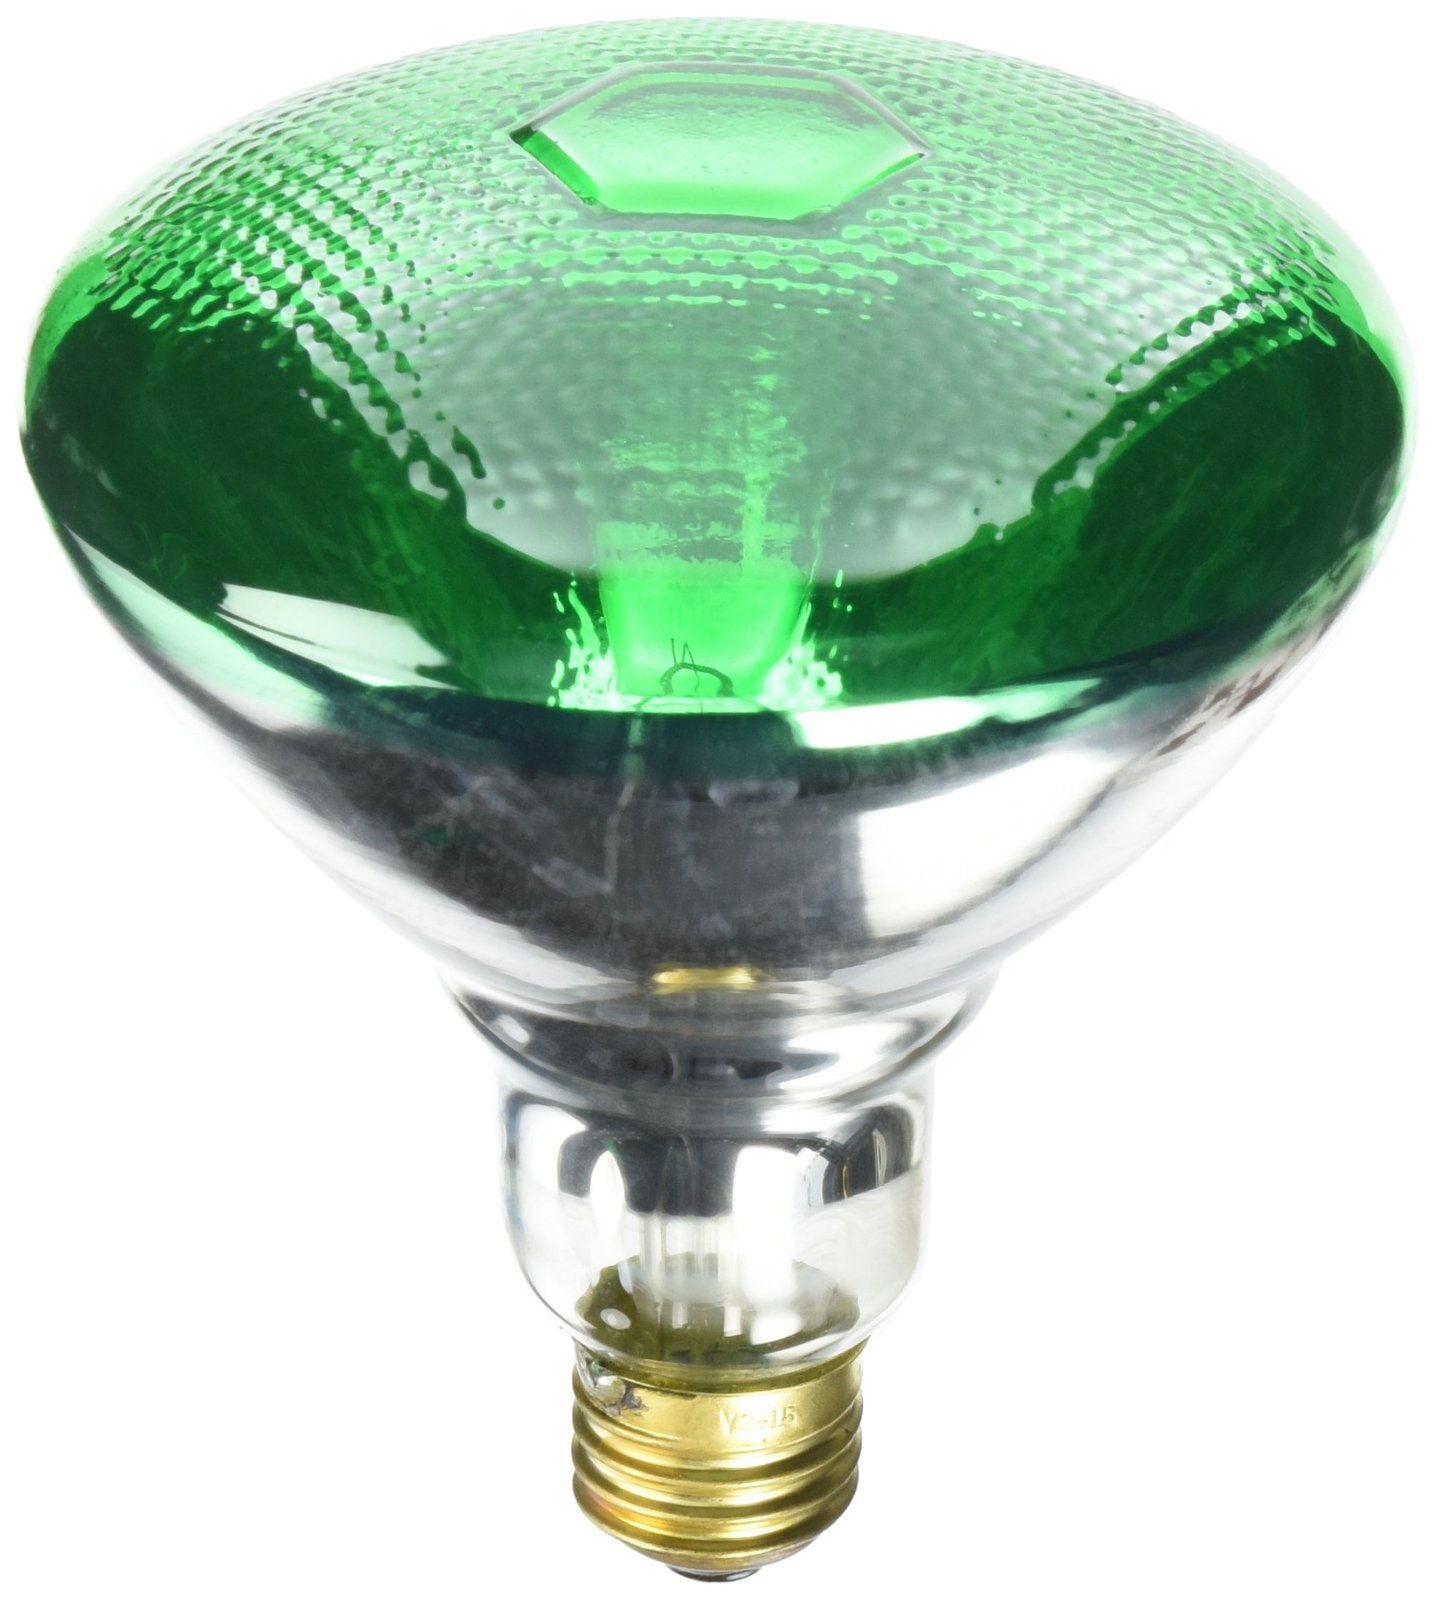 Westinghouse 0441300, 100 Watt, 120 Volt Green Incandescent BR38 Light Bulb - 20